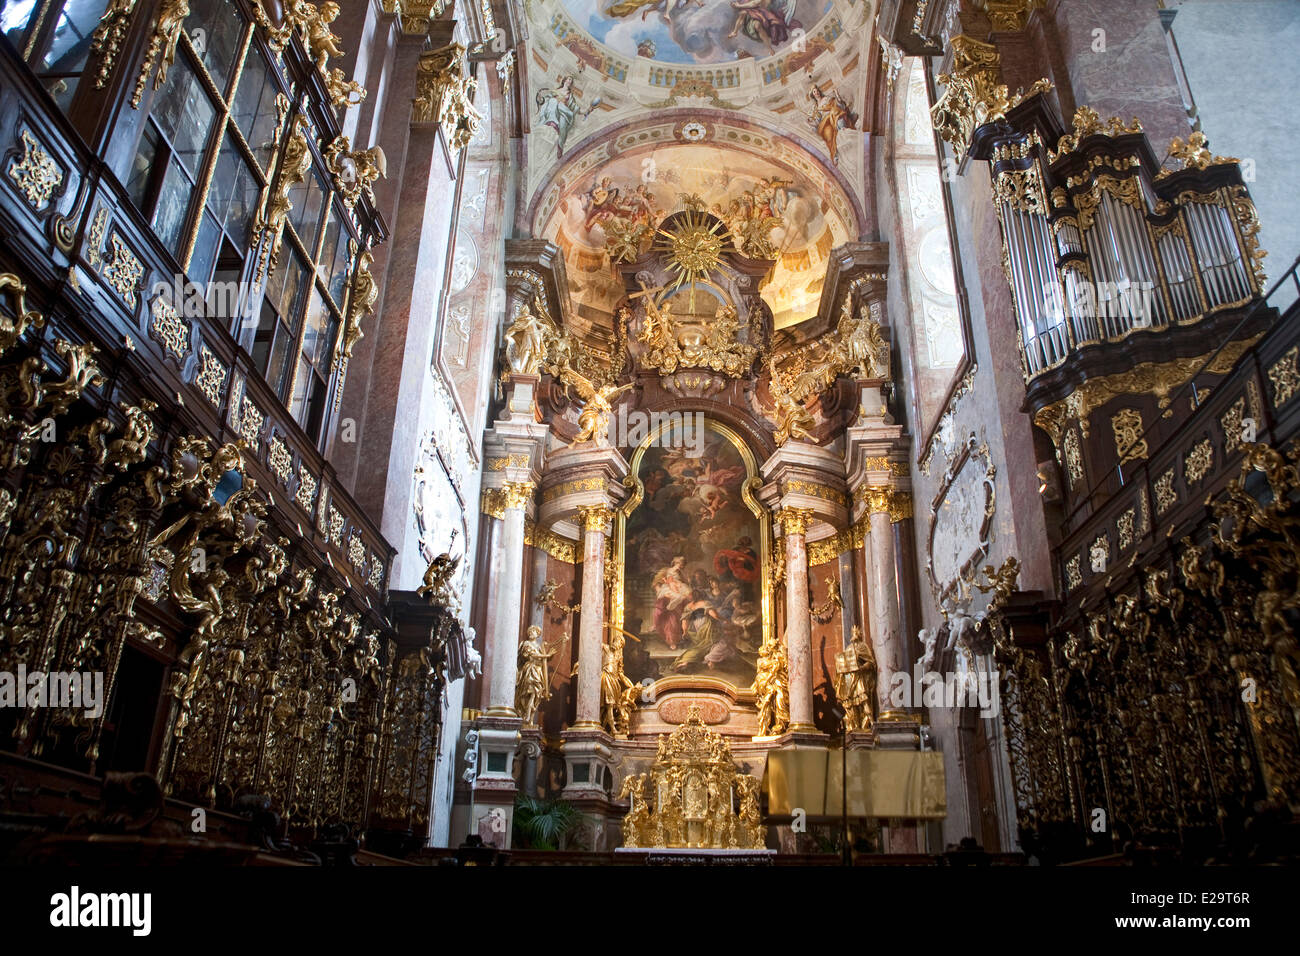 Austria, Lower Austria, Klosterneuburg Monastery (Stift Klosterneuburg), interior of the abbey church Stock Photo